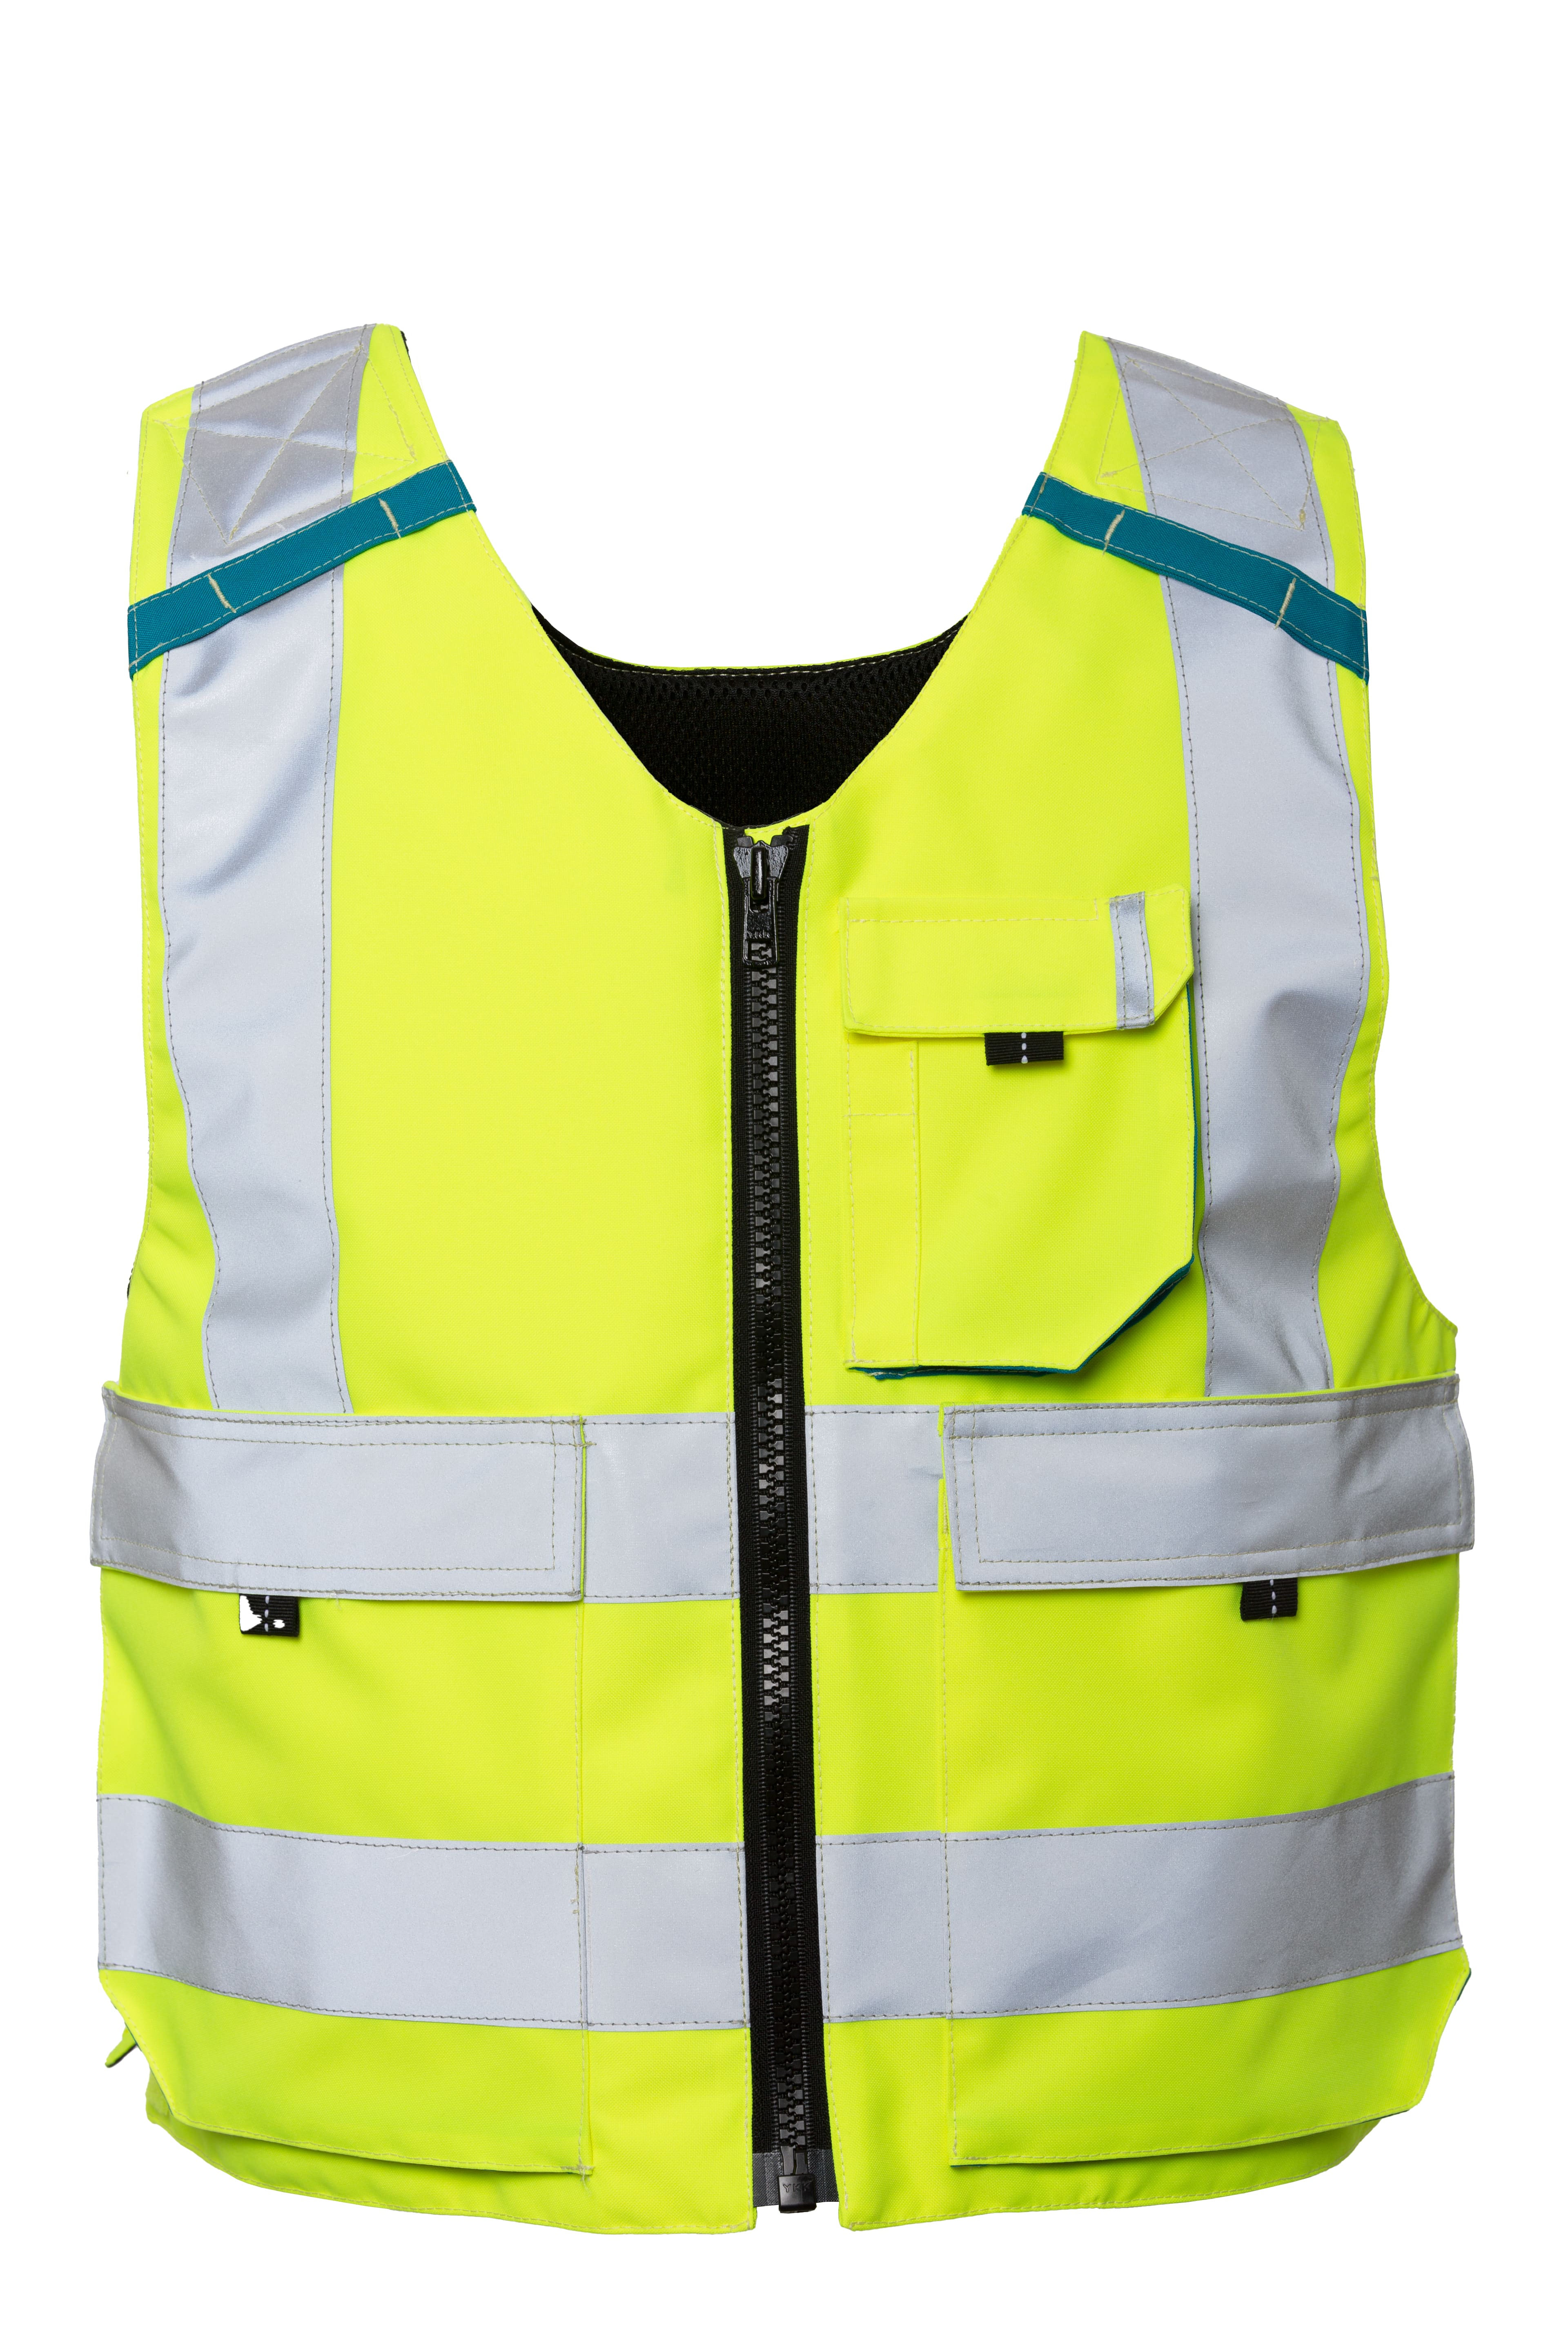 Rescuewear Weste 33655 für Engarde-Protektoren, Klasse 1 Enamelblau / Neon Gelb